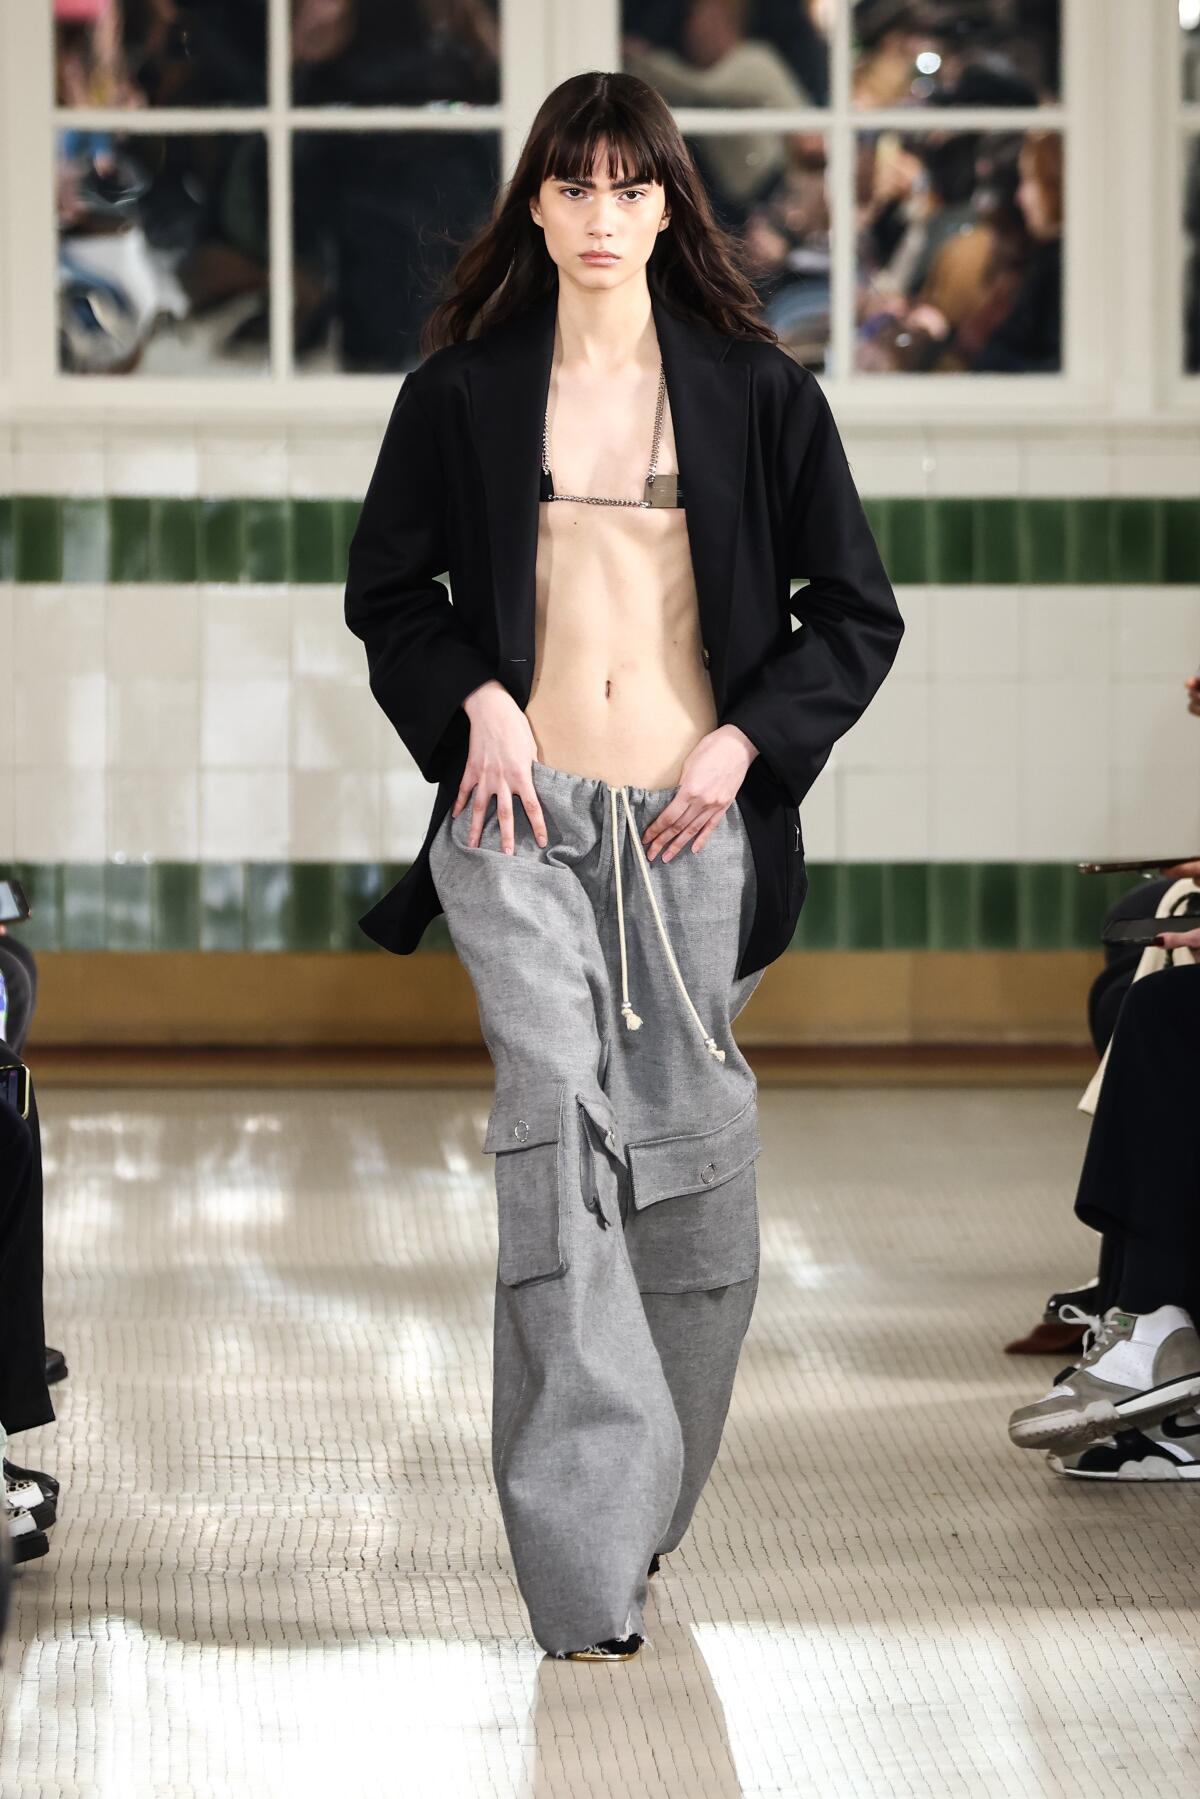 Pantalones Para Hombre de Vestir Elegante Moda Pantalón Deportivo Cargo  Ropa